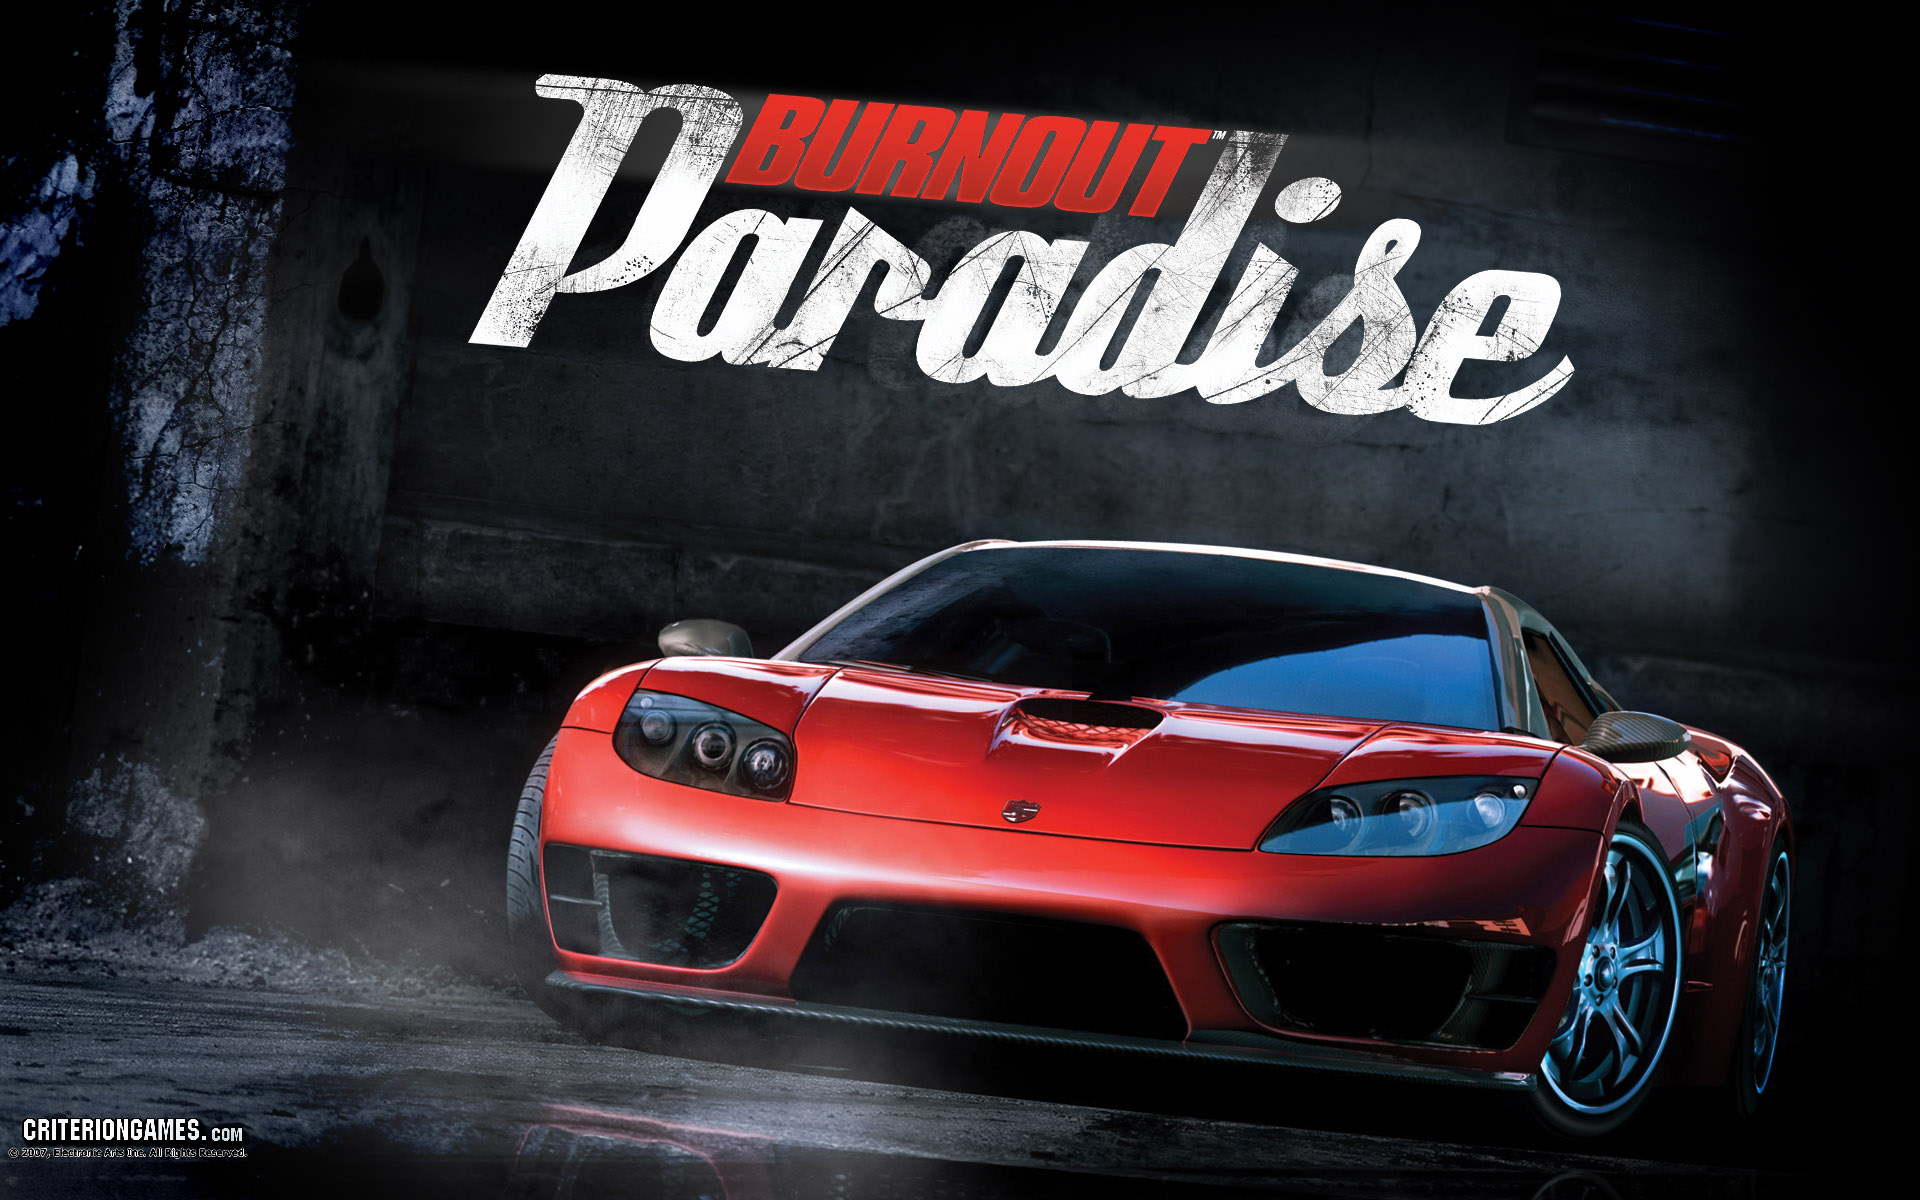 Burnout Paradise Pics, Video Game Collection